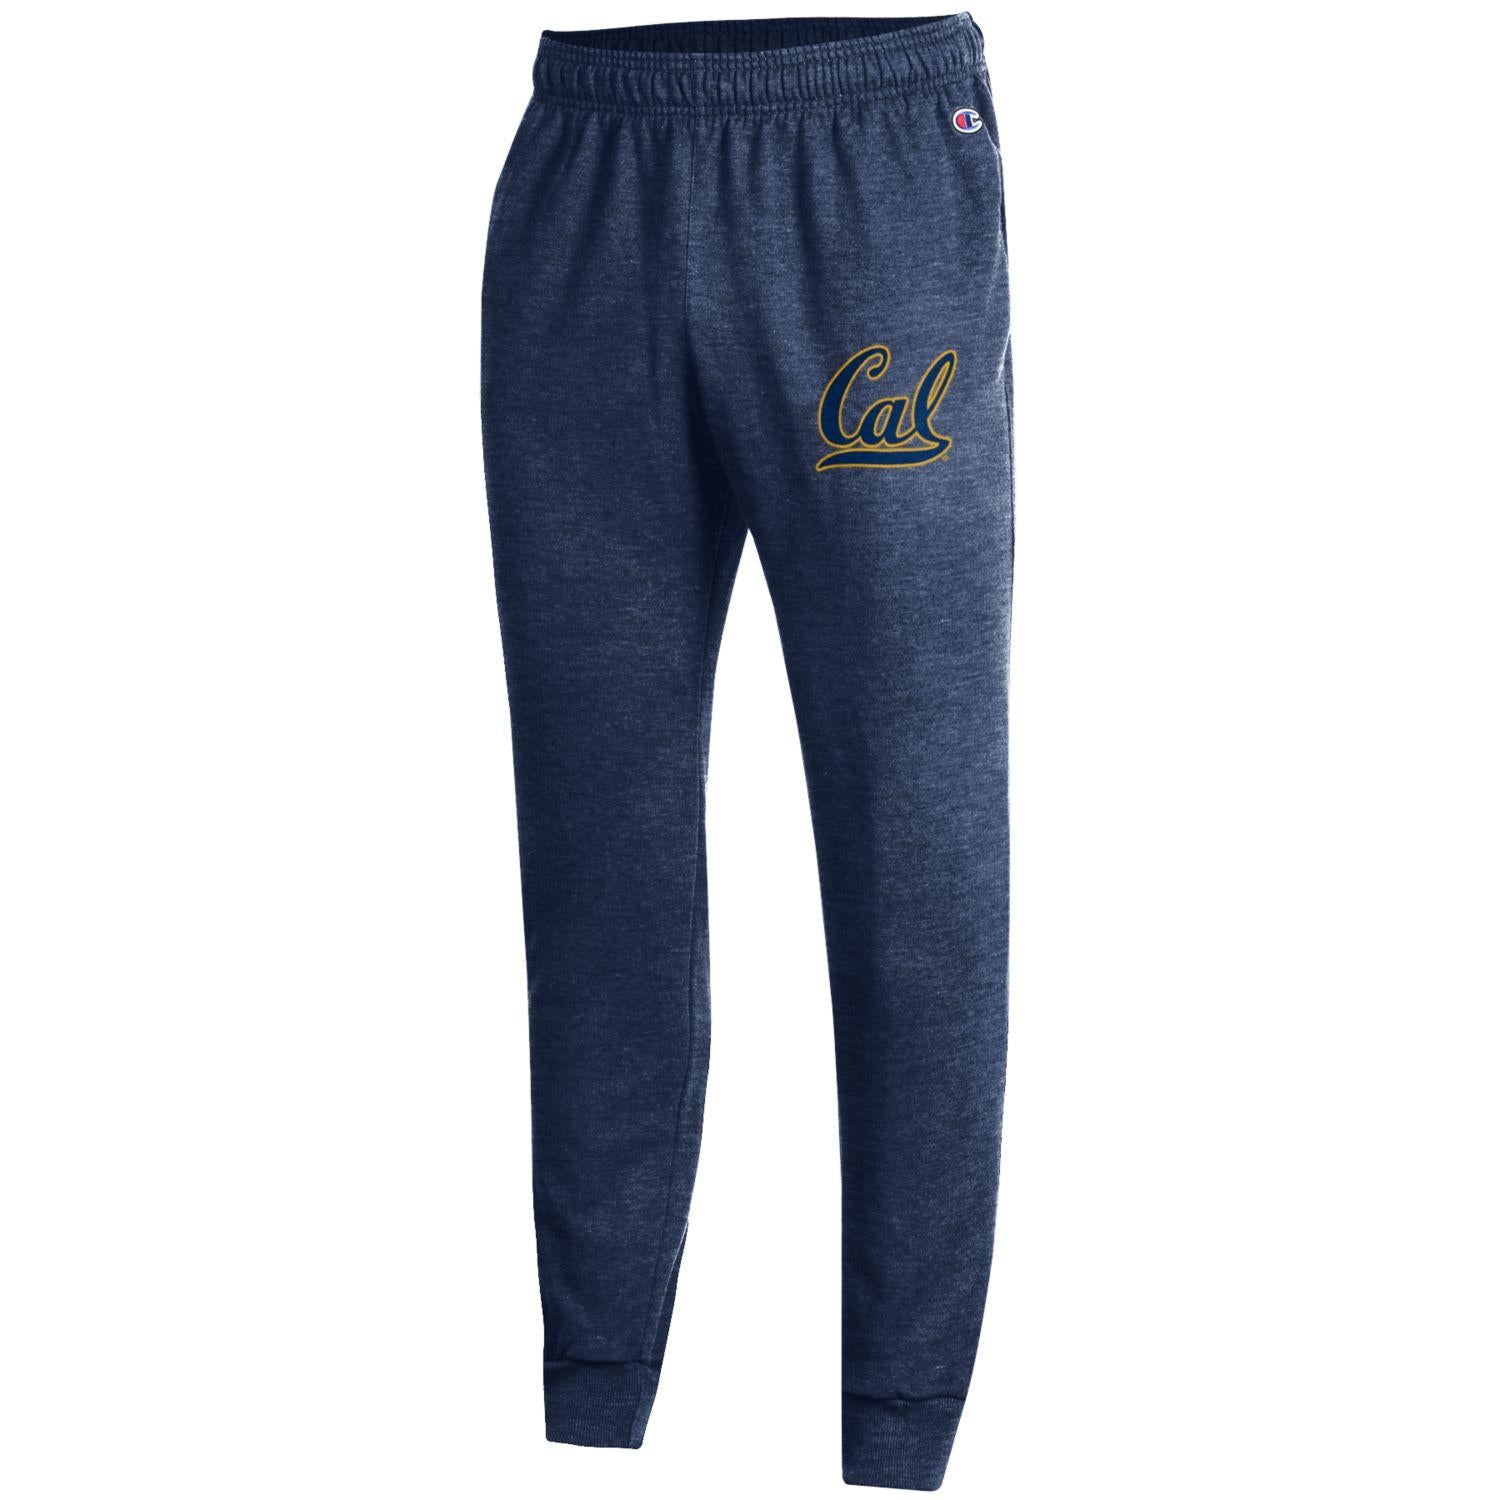 U.C. Berkeley bold Cal jogger pants-Navy heather-Shop College Wear